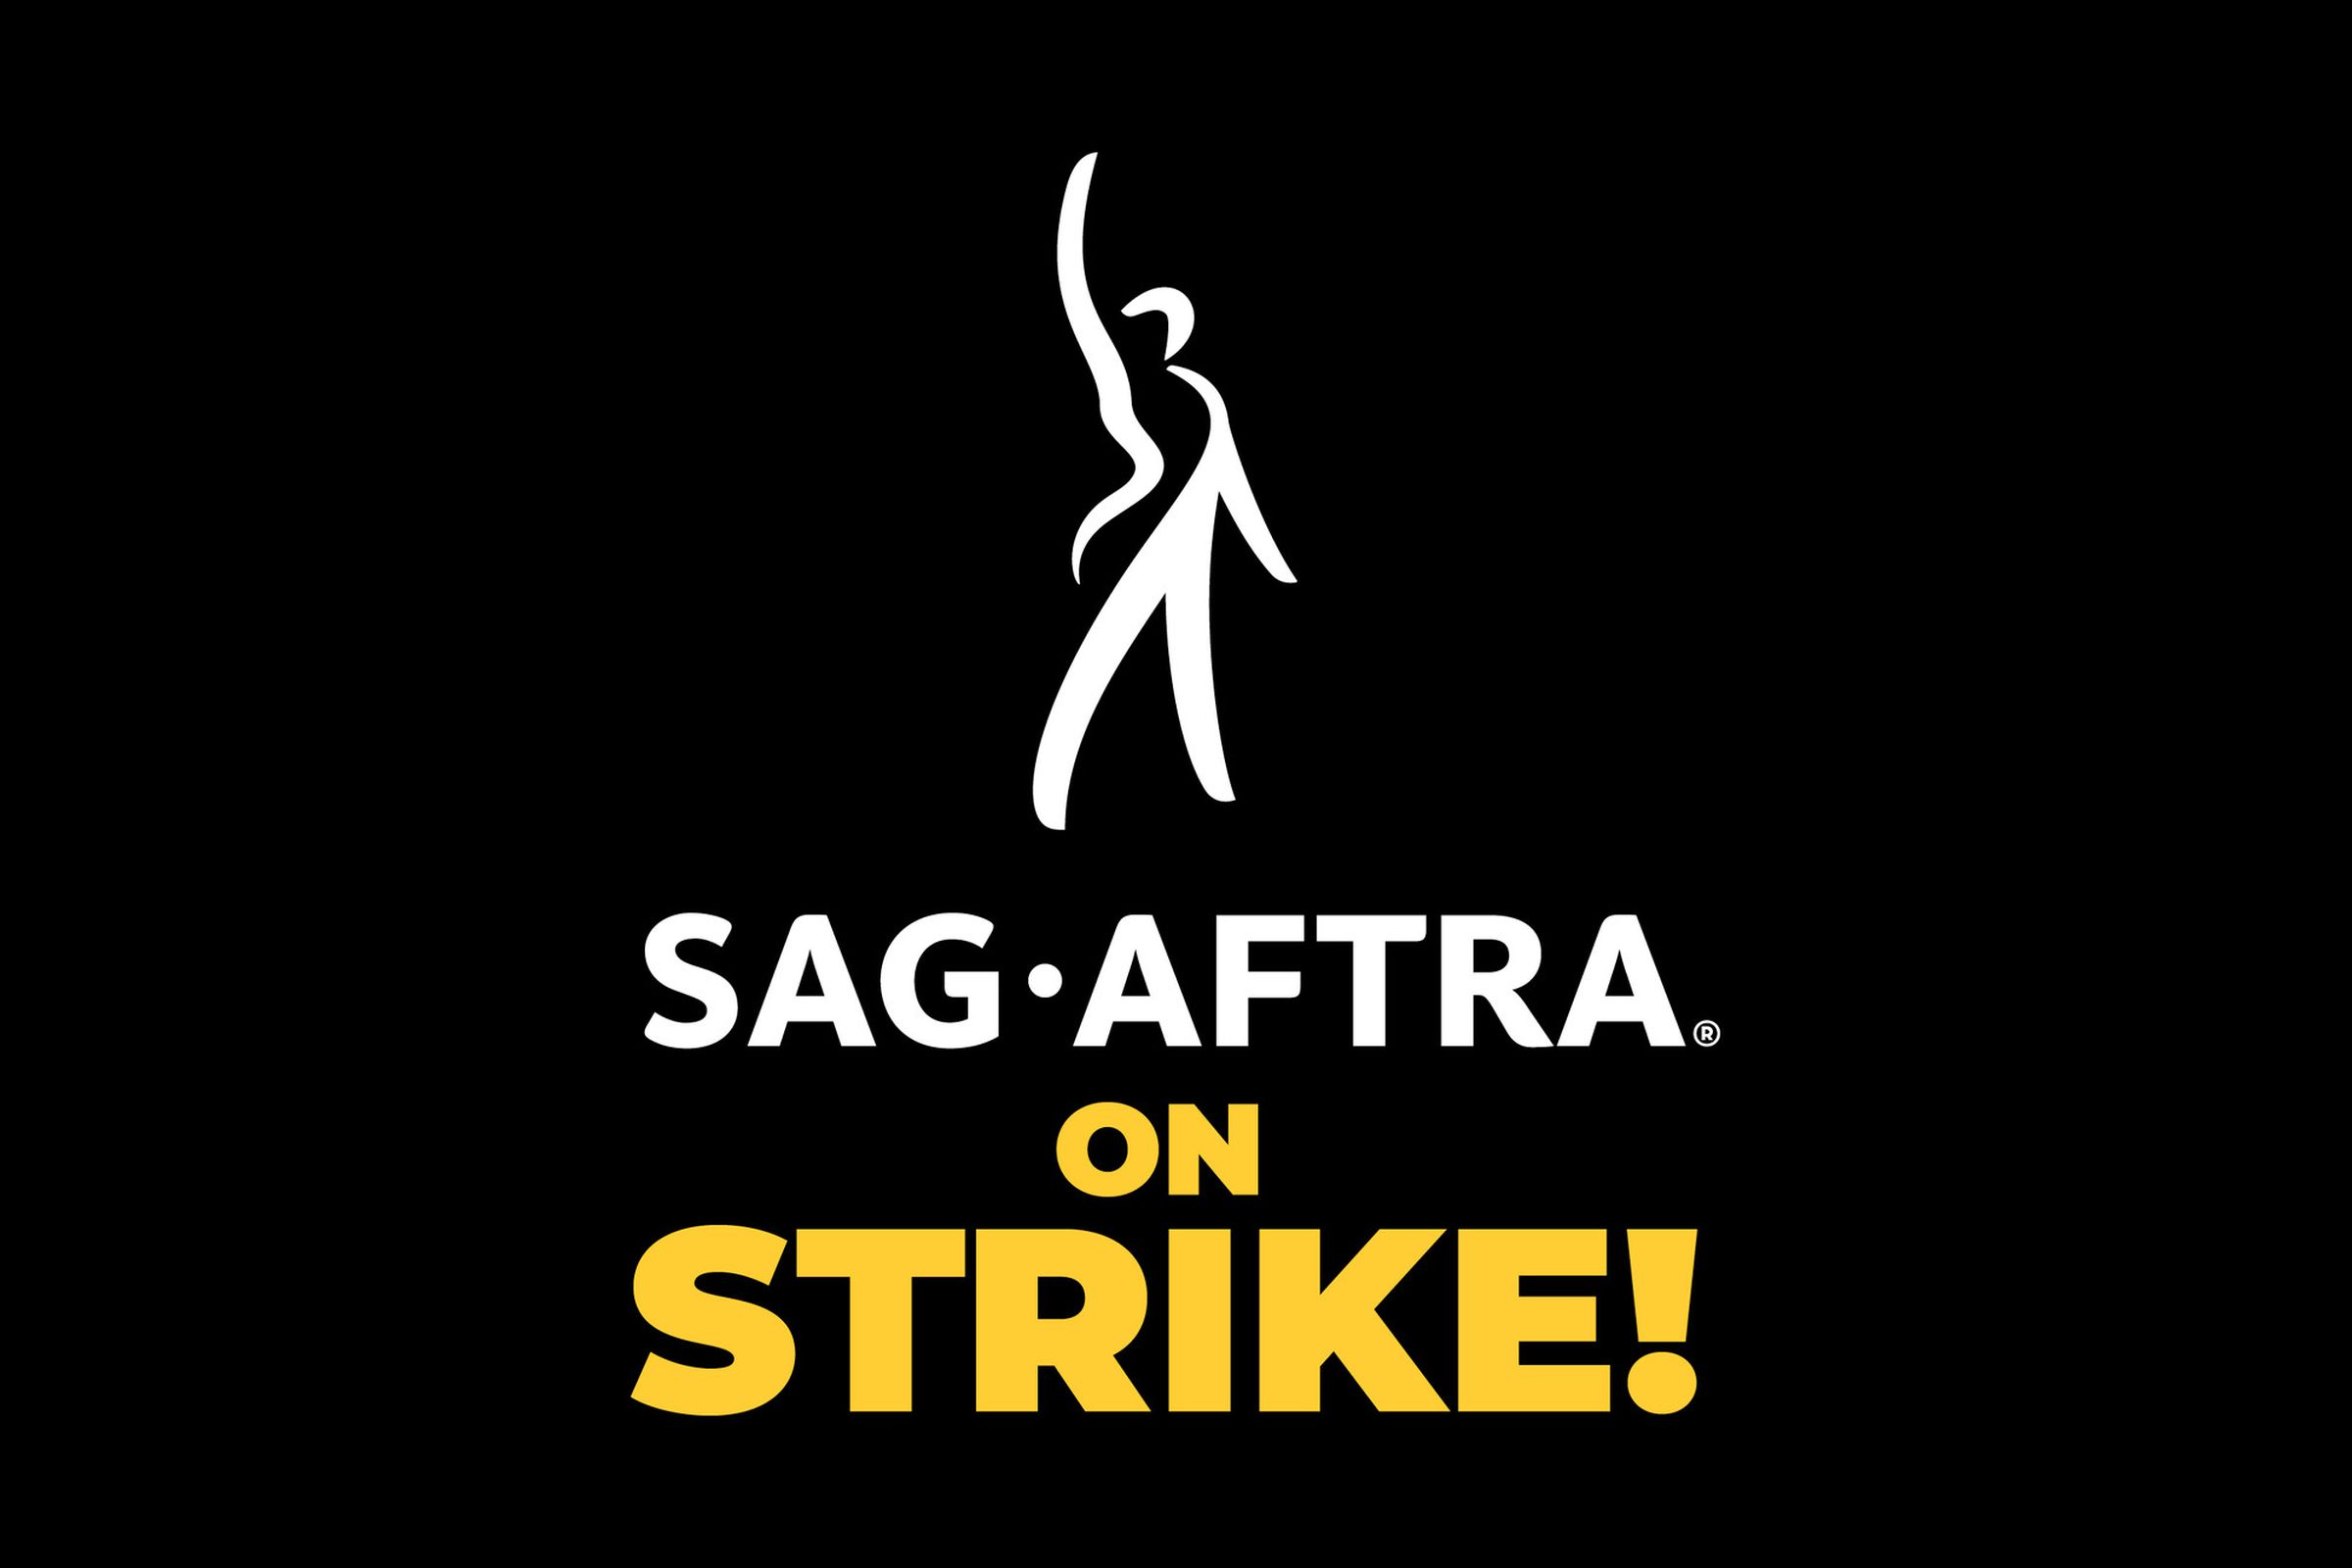 The SAG-AFTRA logo placed above the words “SAG-AFTRA ON STRIKE!”